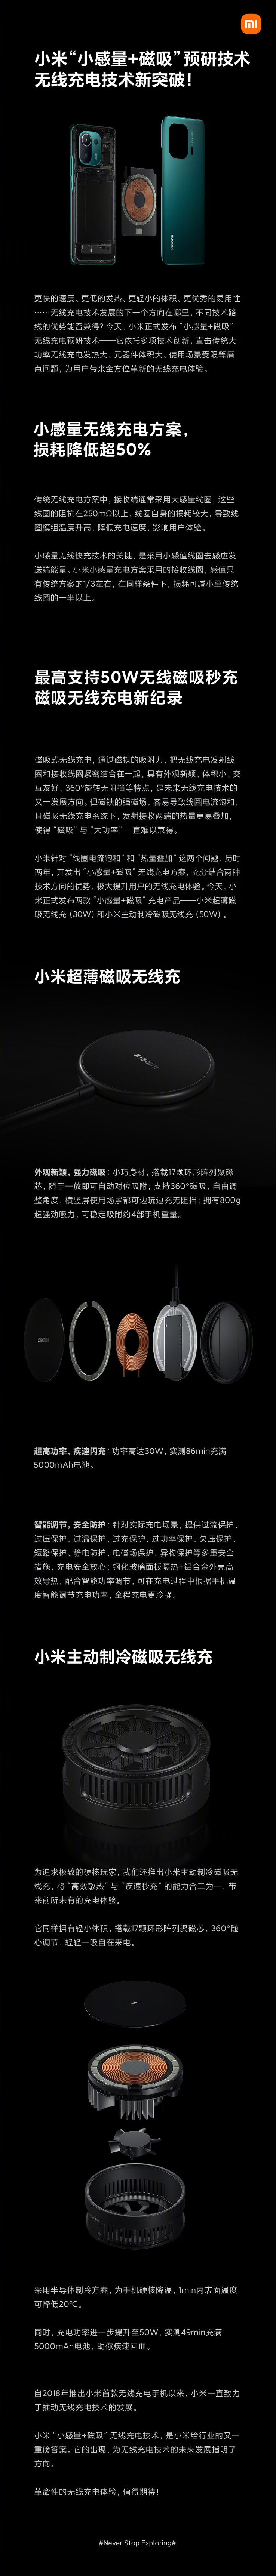 Xiaomi presents an infographic for its new wireless charging tech. (Source: Xiaomi via Weibo)